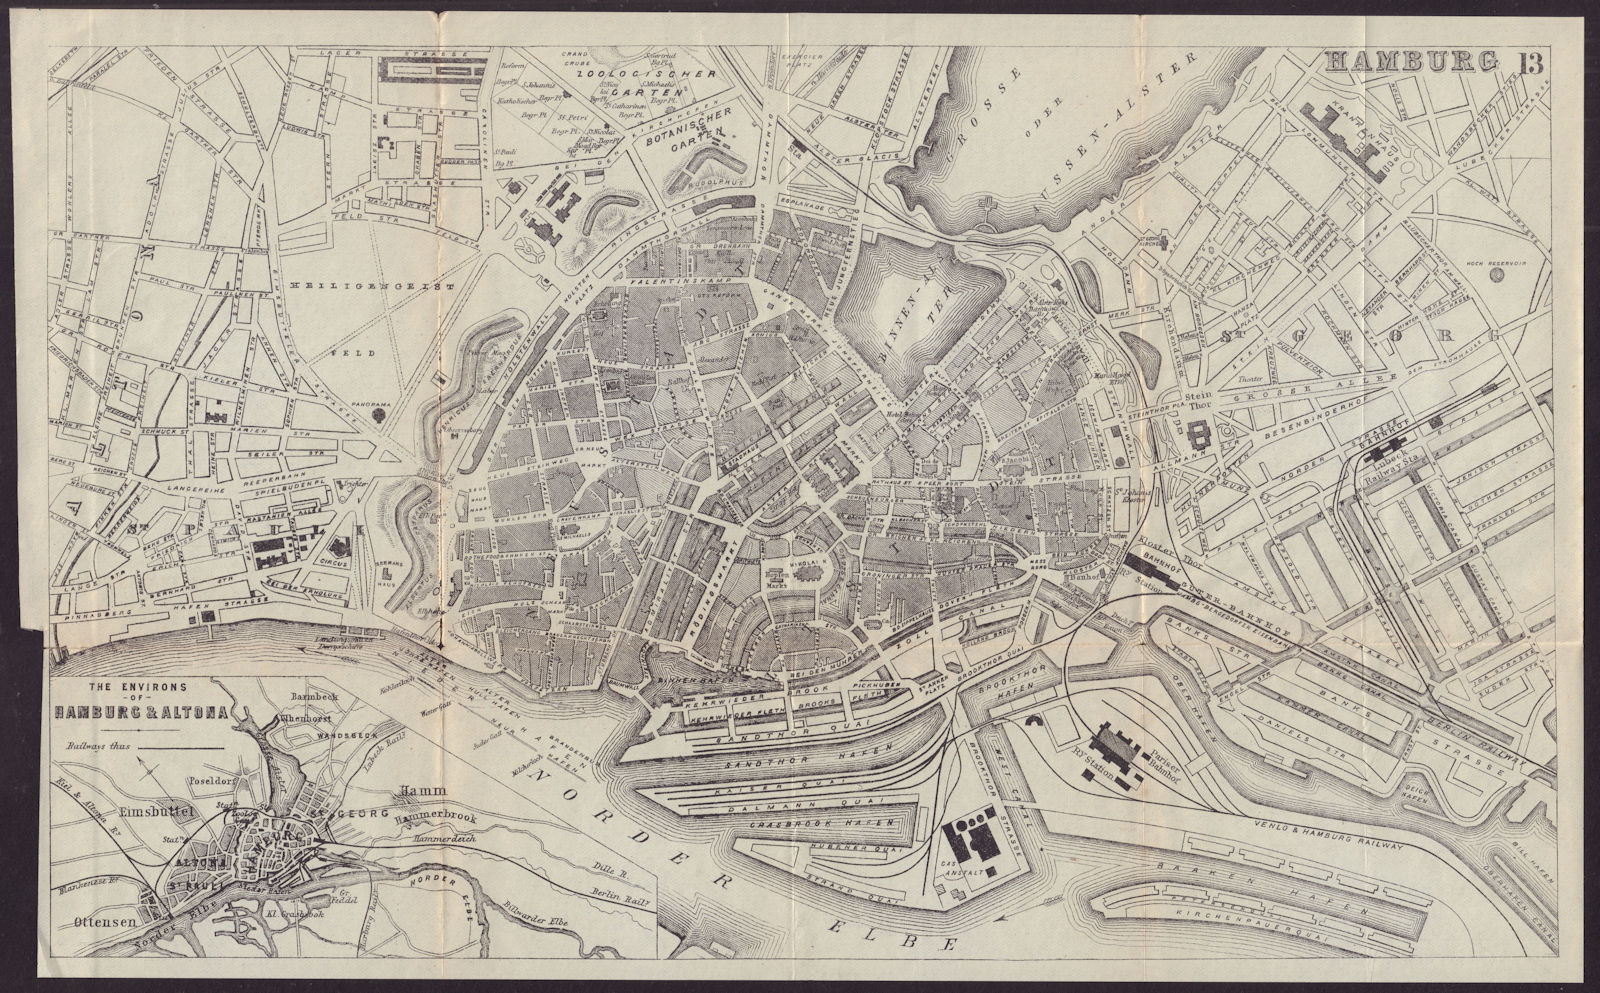 HAMBURG antique town plan city map. Germany. BRADSHAW c1899 old